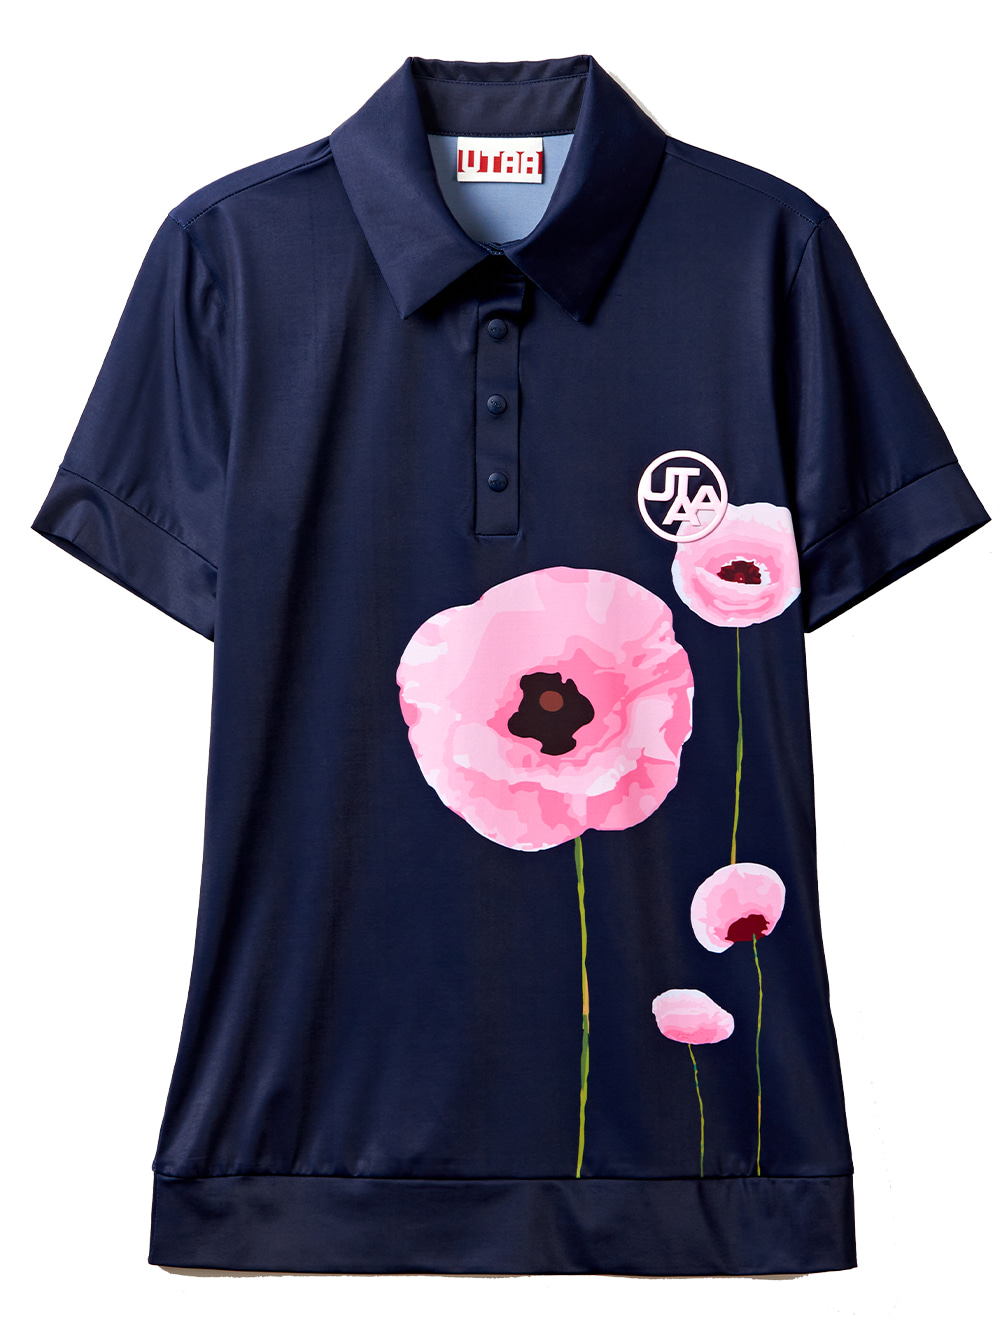 UTAA Swing Fit Poppy PK T-shirts : Womens (UA3TSF470NA)